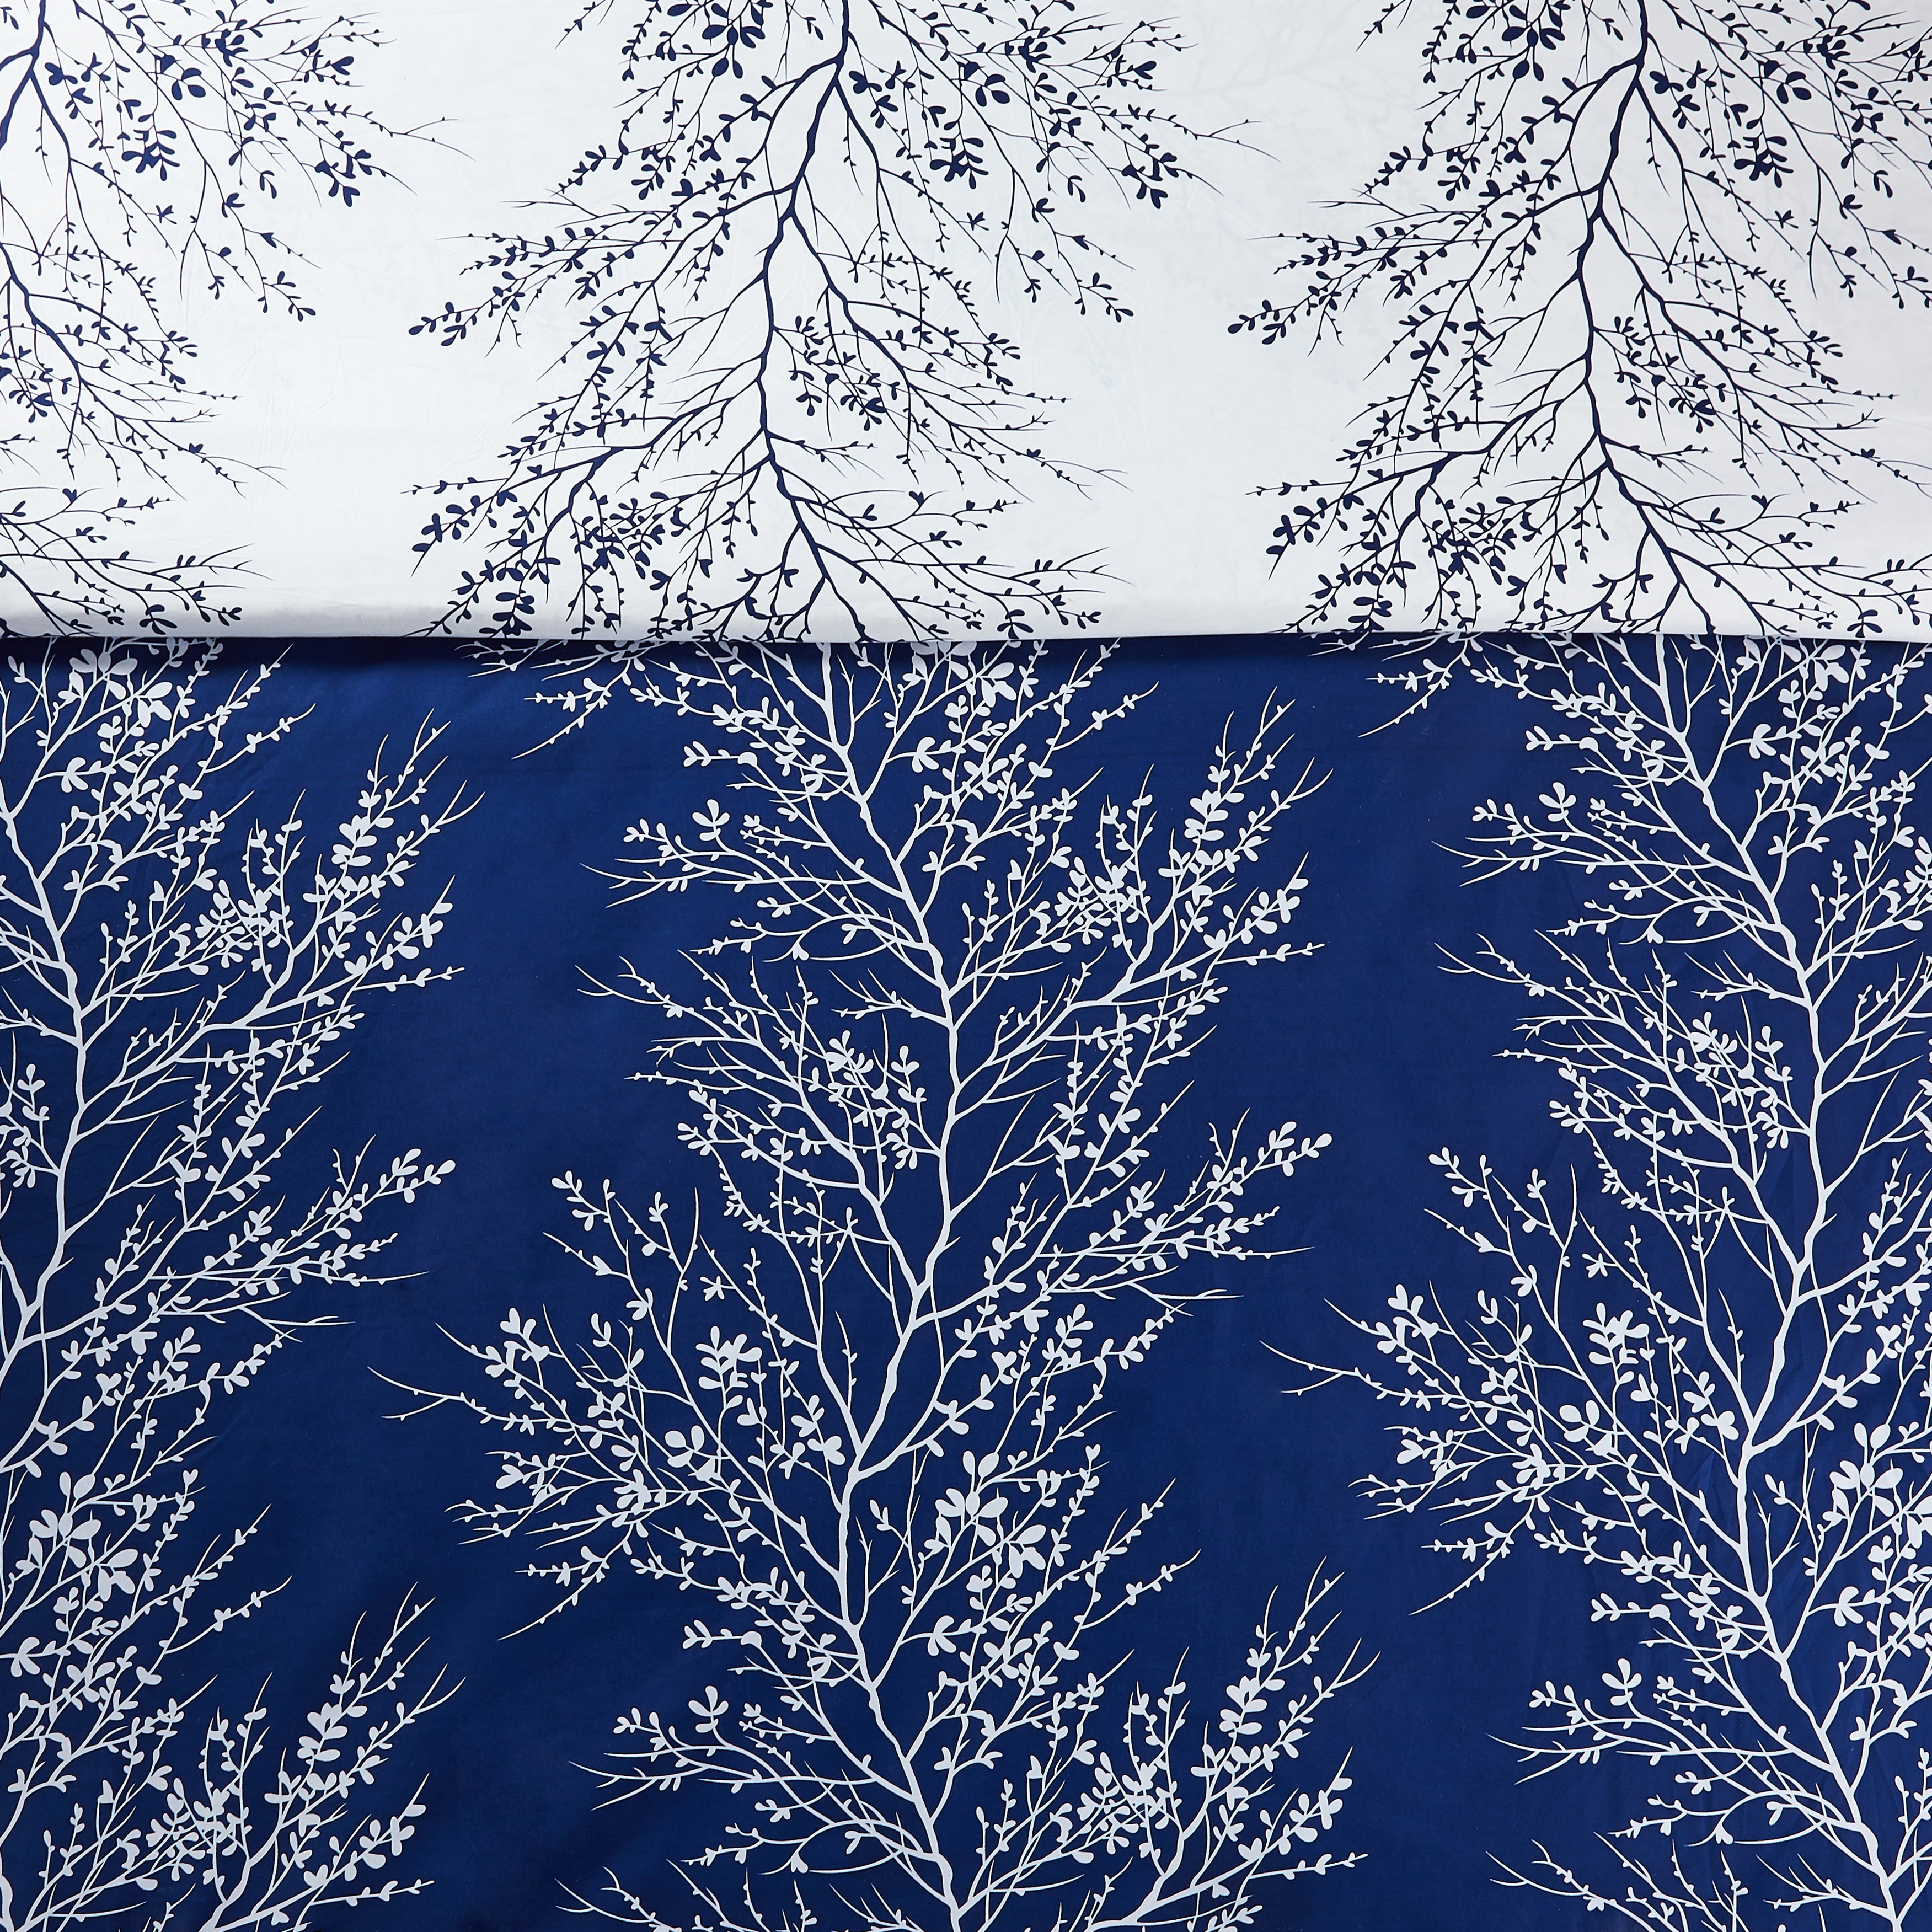 Foliage Reversible Comforter Set + Two Free Sham Pillows - Spirit Linen - Navy